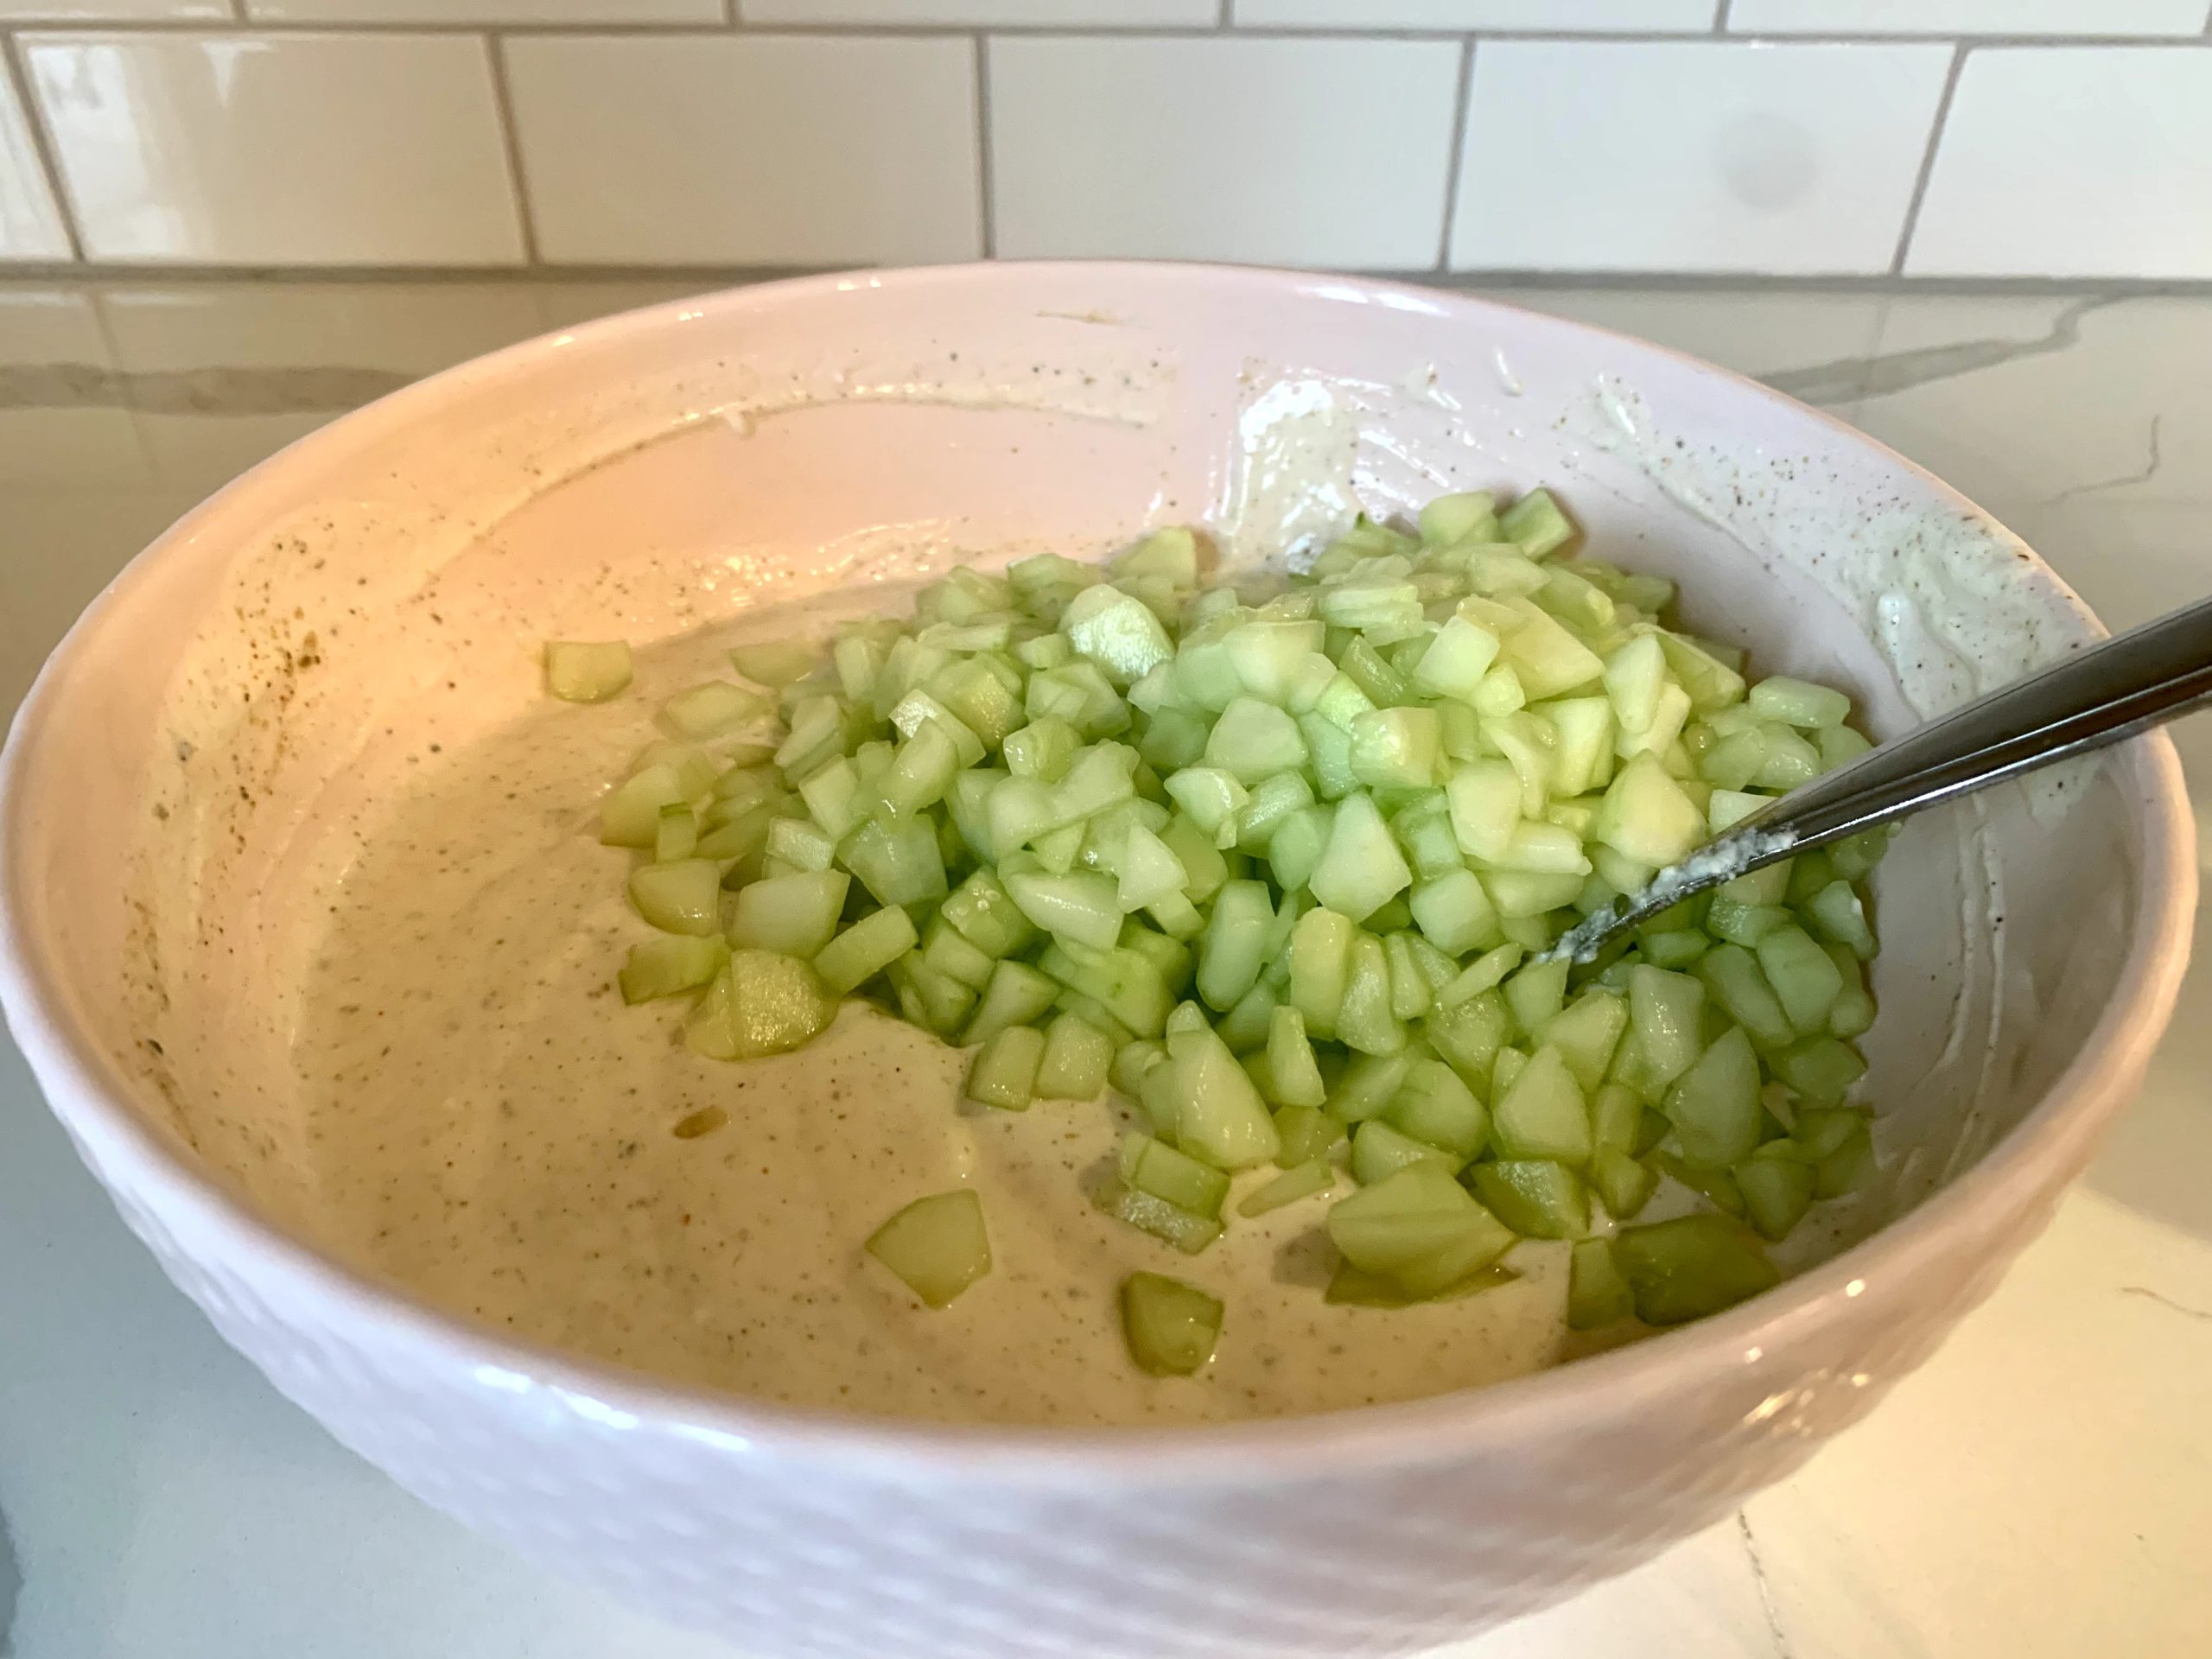 Add cucumber, garlic and mix